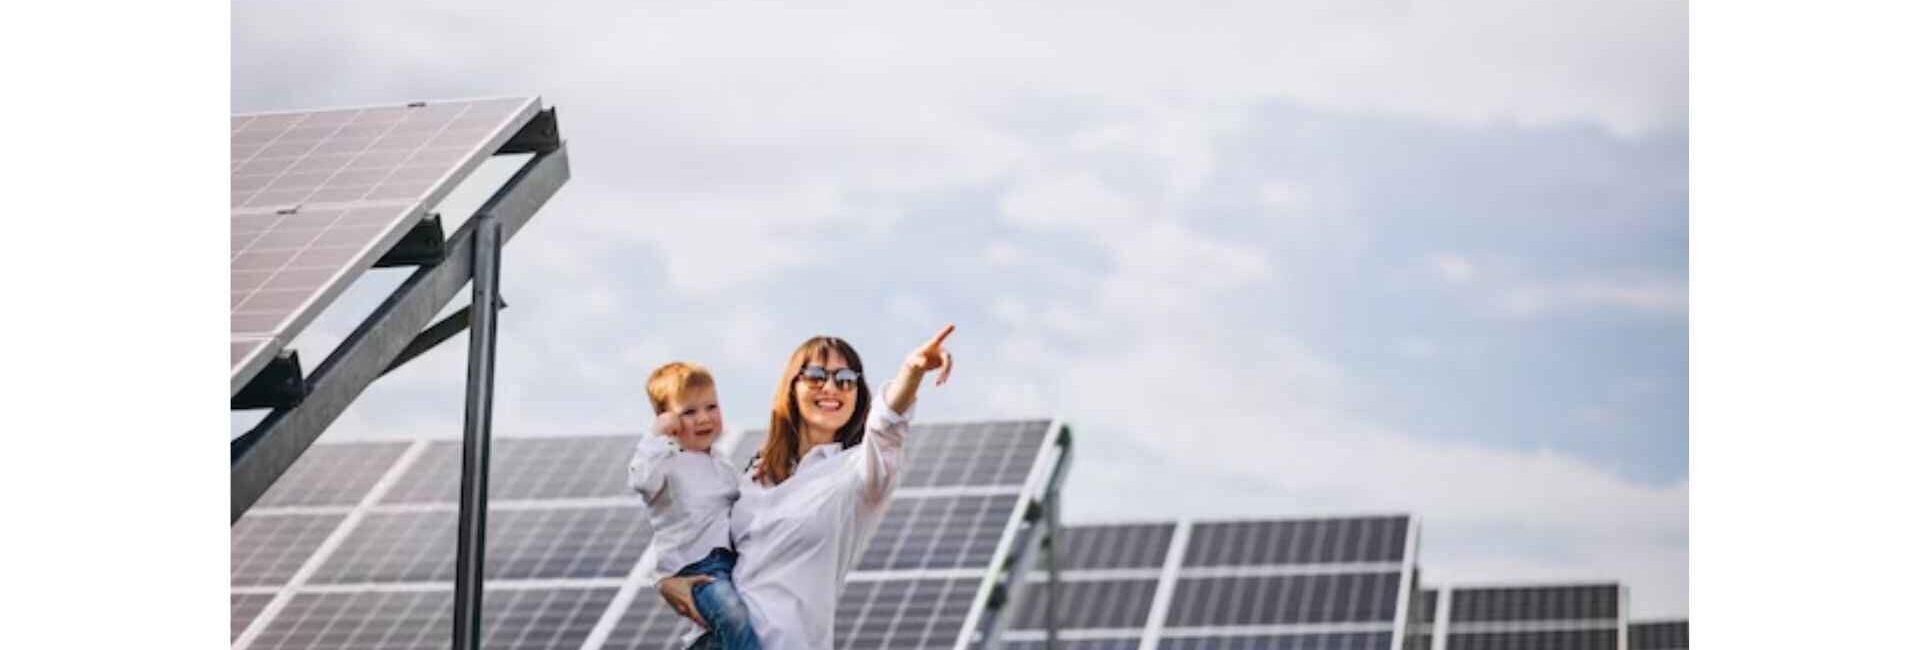 Nirmla Solar Power - Solar Power Dealer in Noida